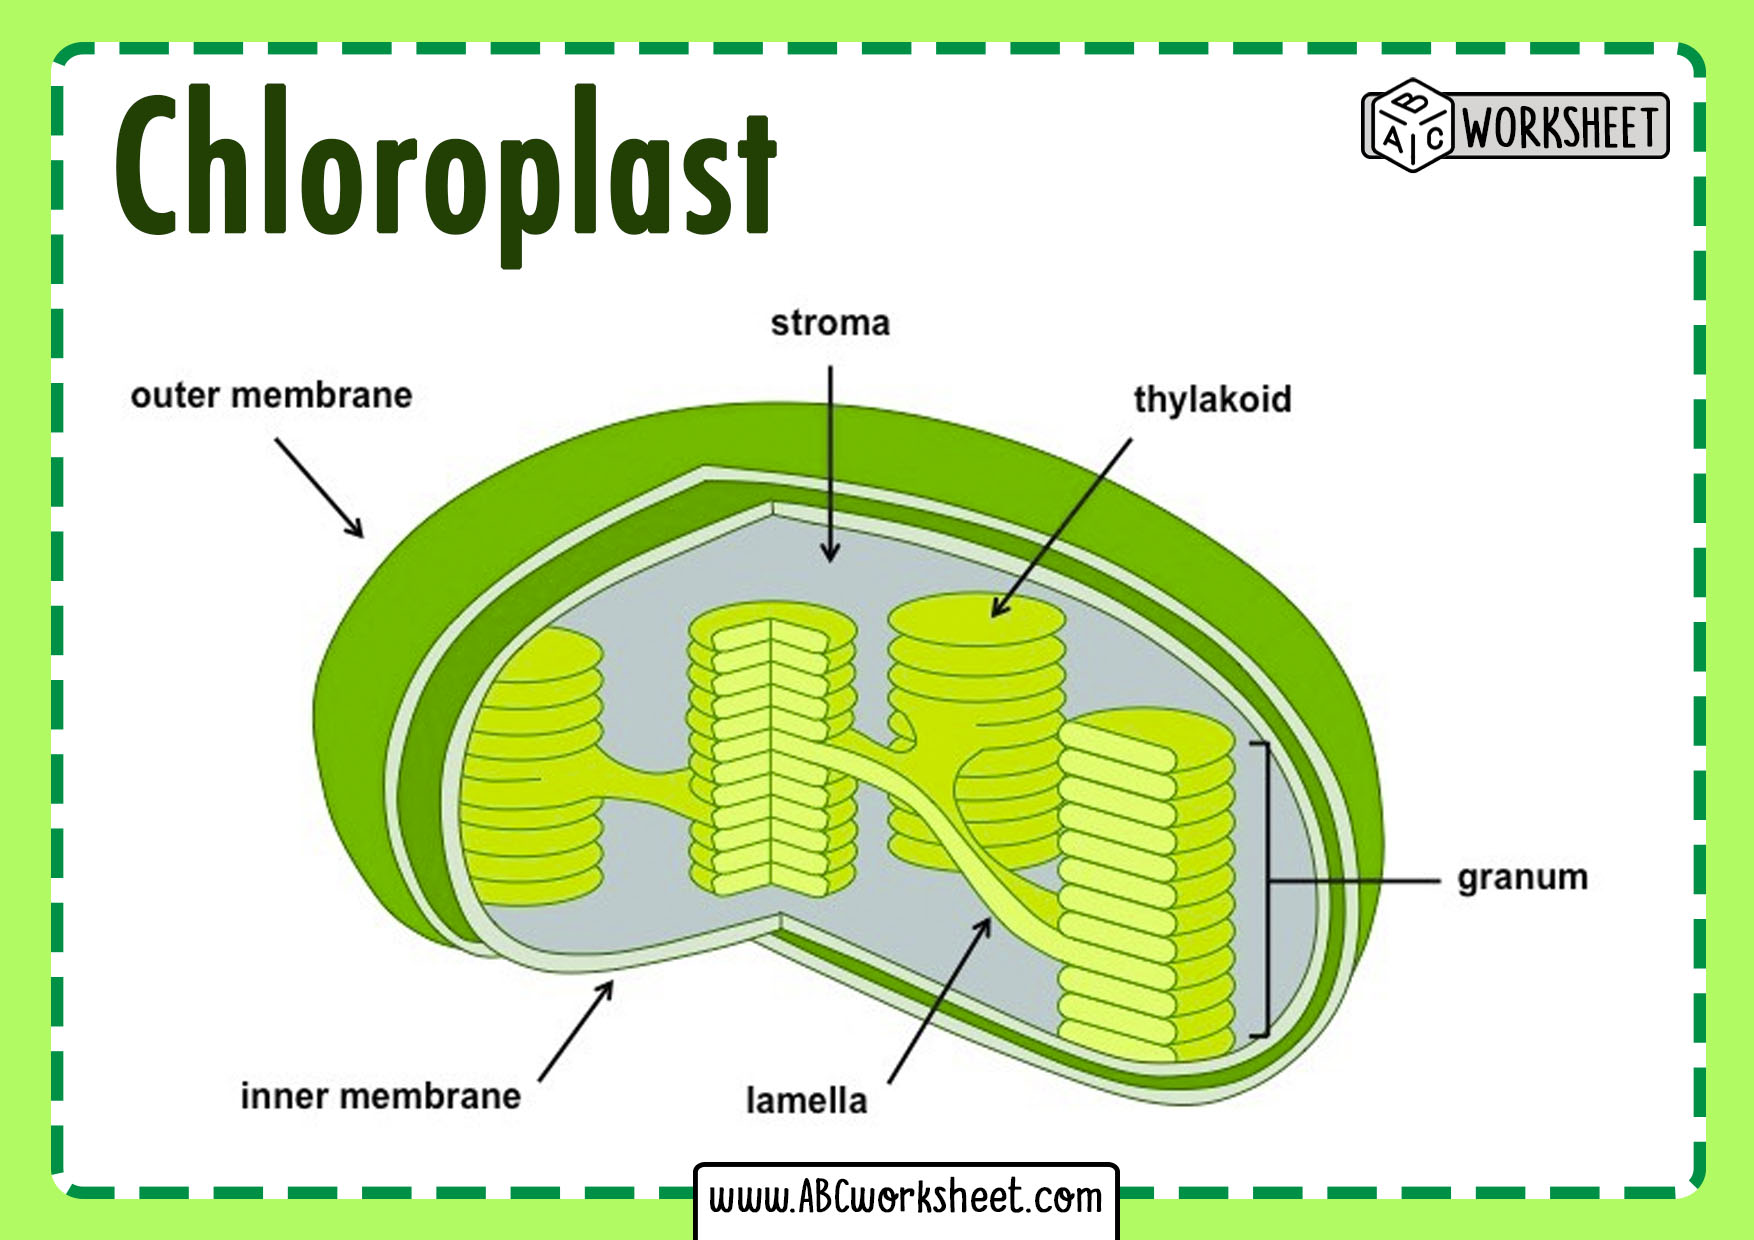 Chloroplast Structure - ABC Worksheet